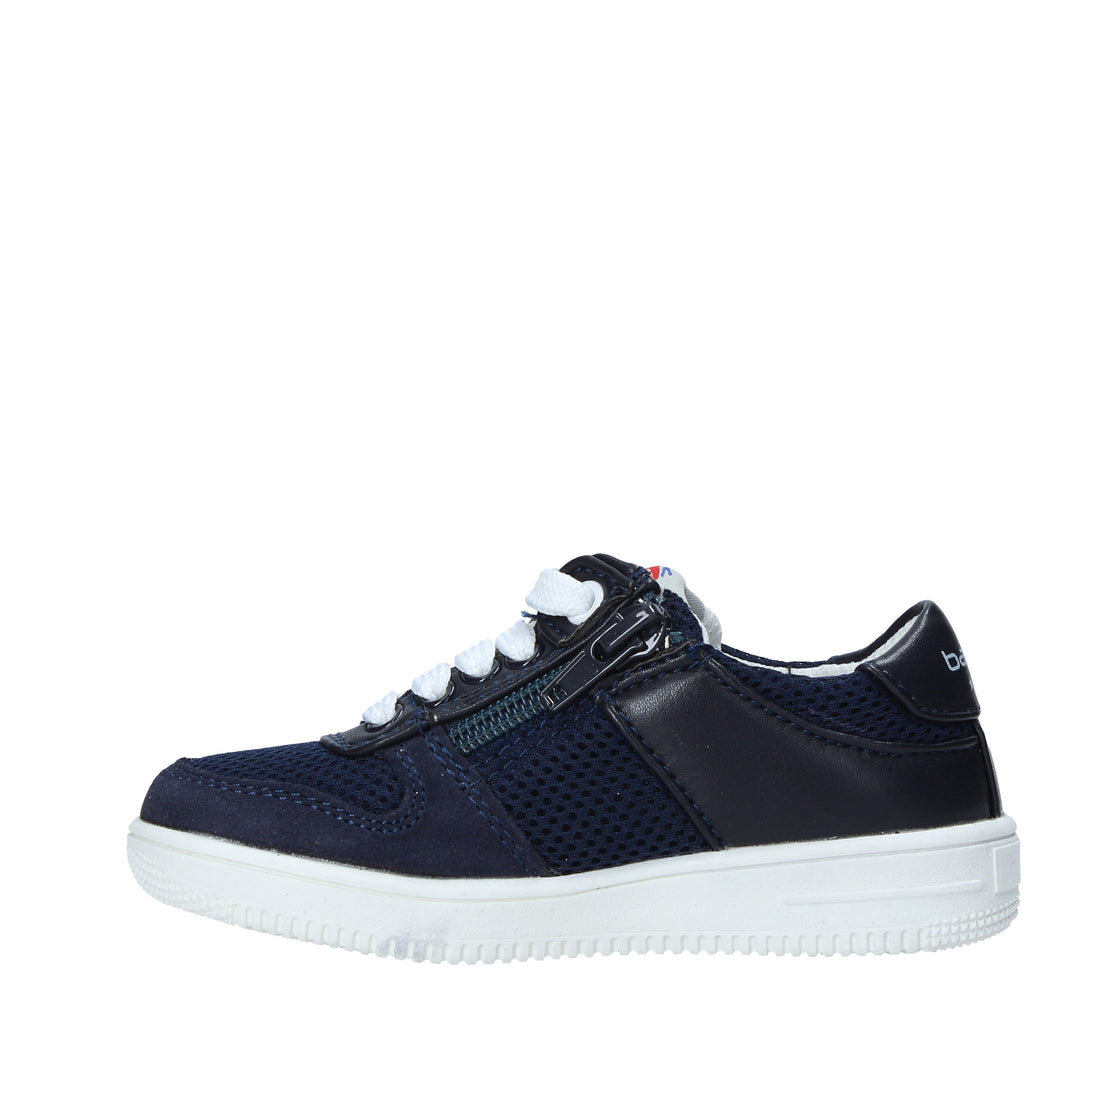 Sneakers Blu Balducci